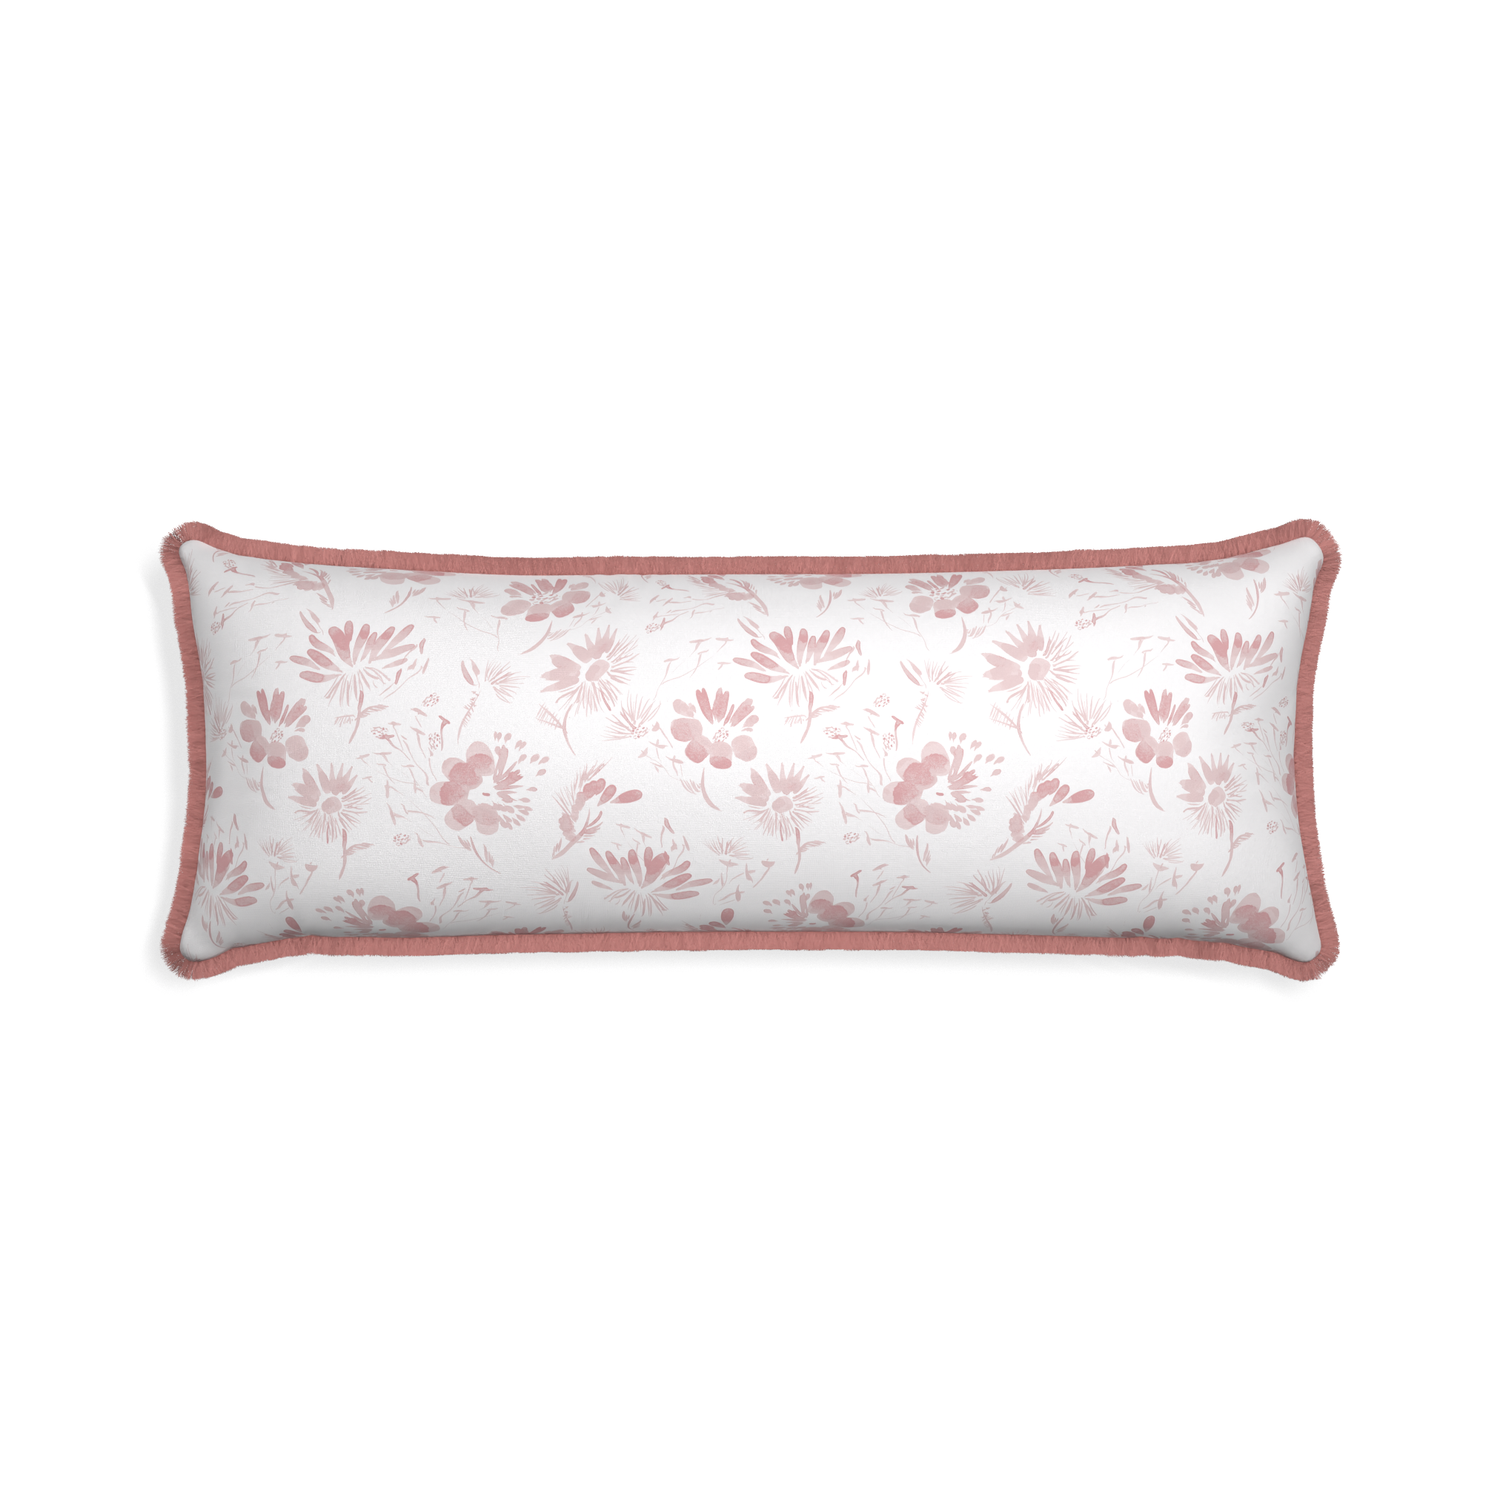 Xl-lumbar blake custom pink floralpillow with d fringe on white background